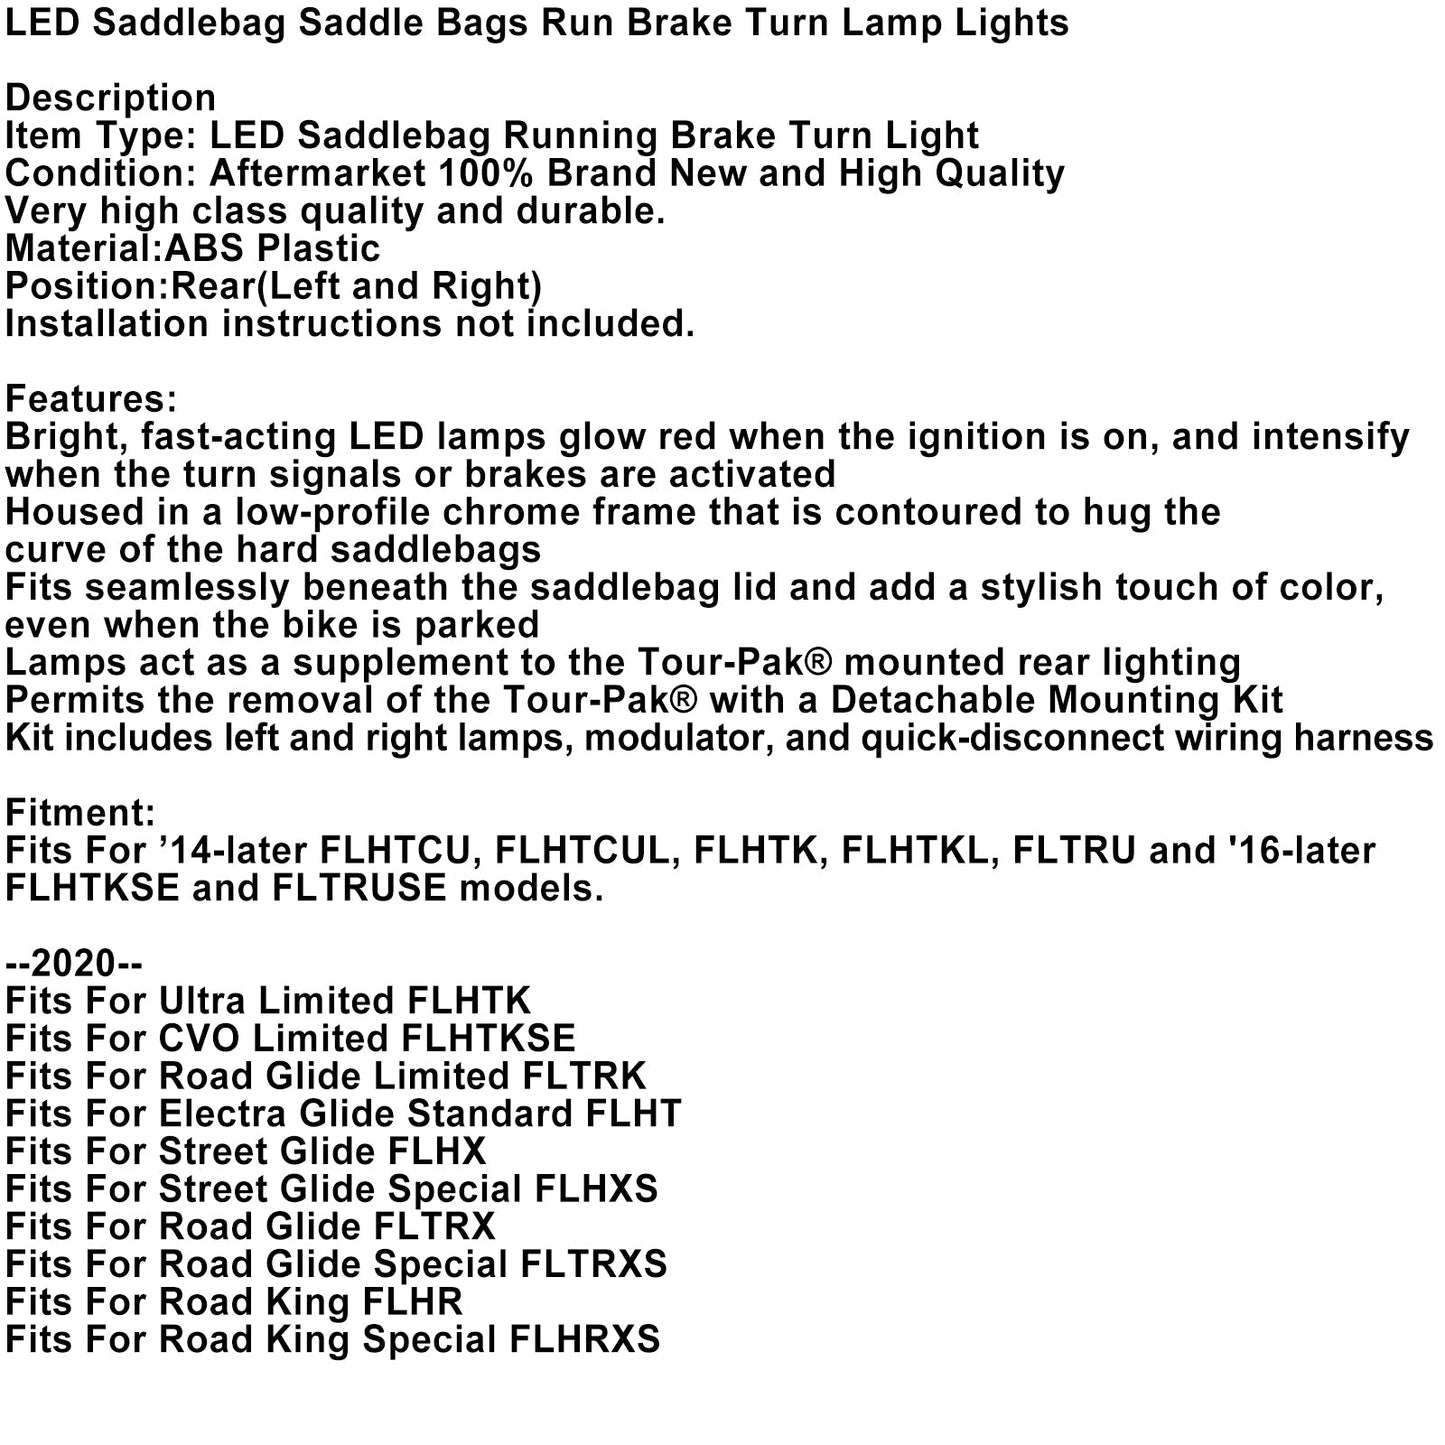 LED Saddlebag Saddle Bags Run Brake Turn Lamp Lights For Touring 2014-2021 Red